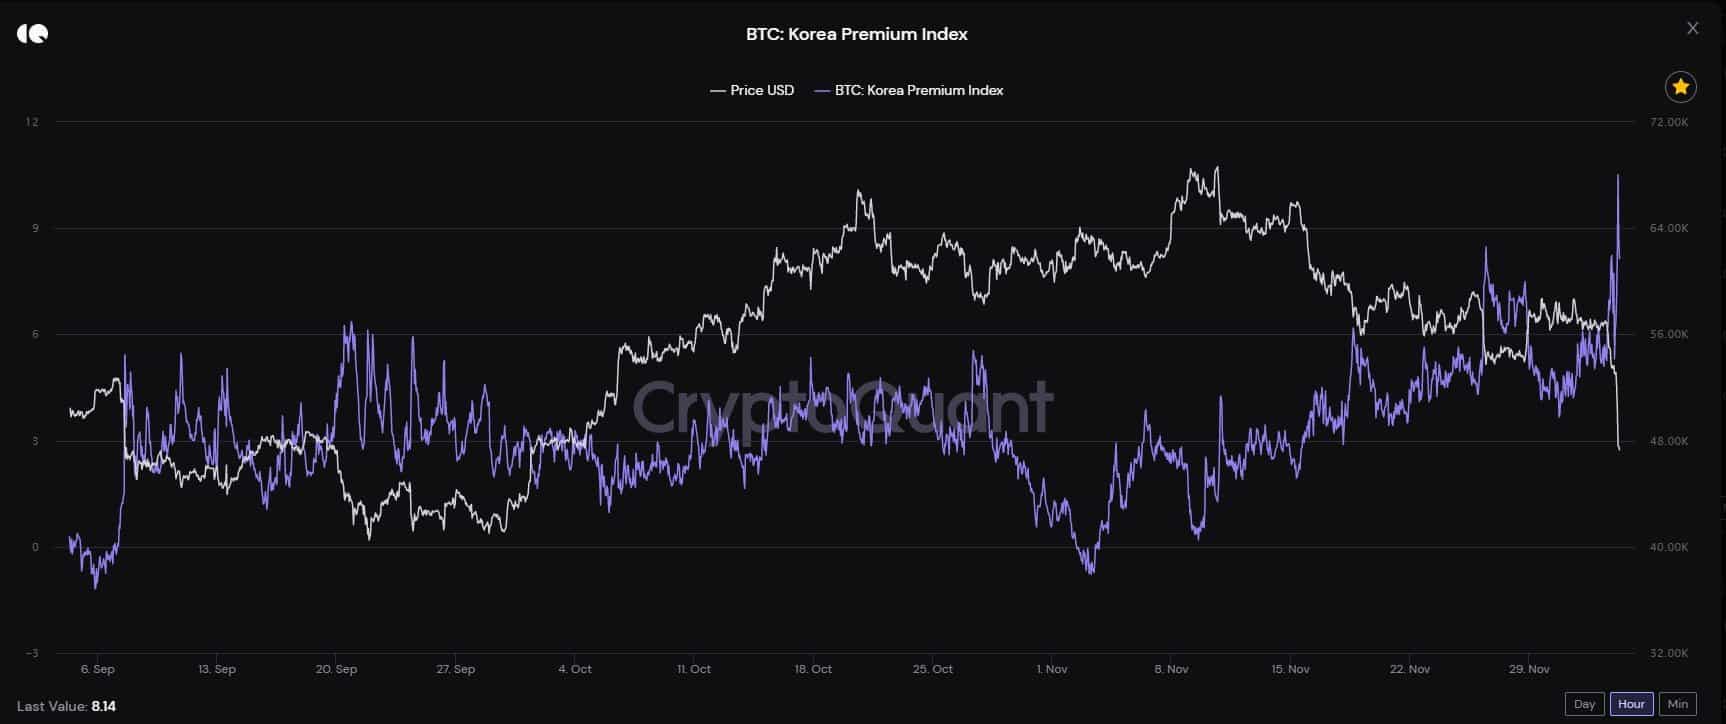 Bitcoin Premium on Korean Exchanges. Source: CryptoQuant